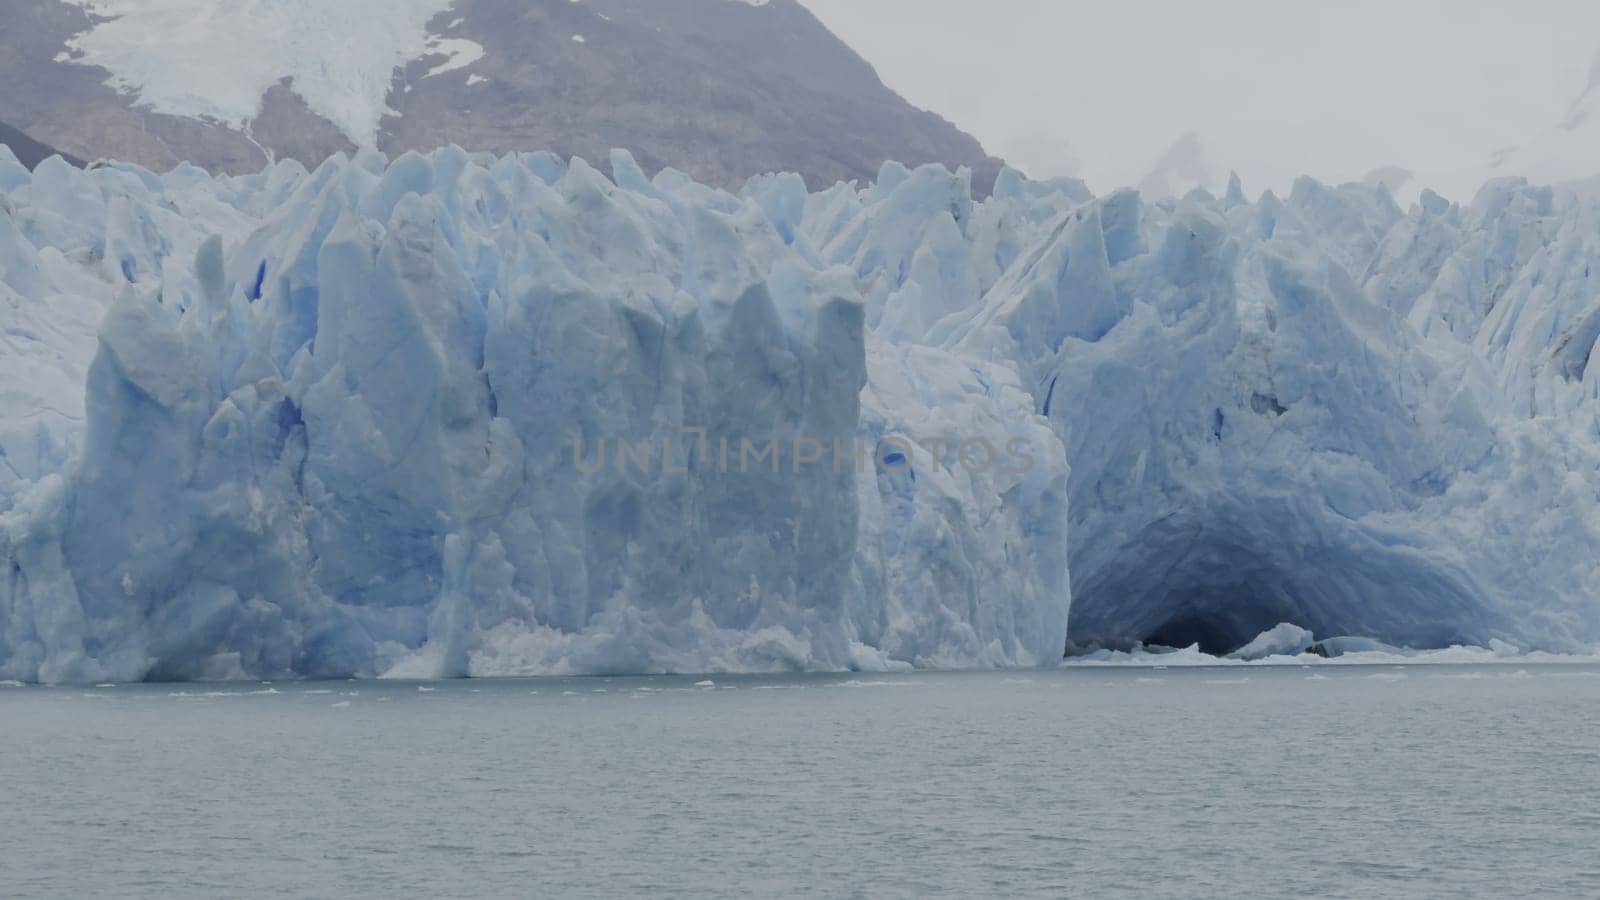 Boat tour video displays the grandeur of Perito Moreno Glacier's walls and ice tunnels in slow-mo.